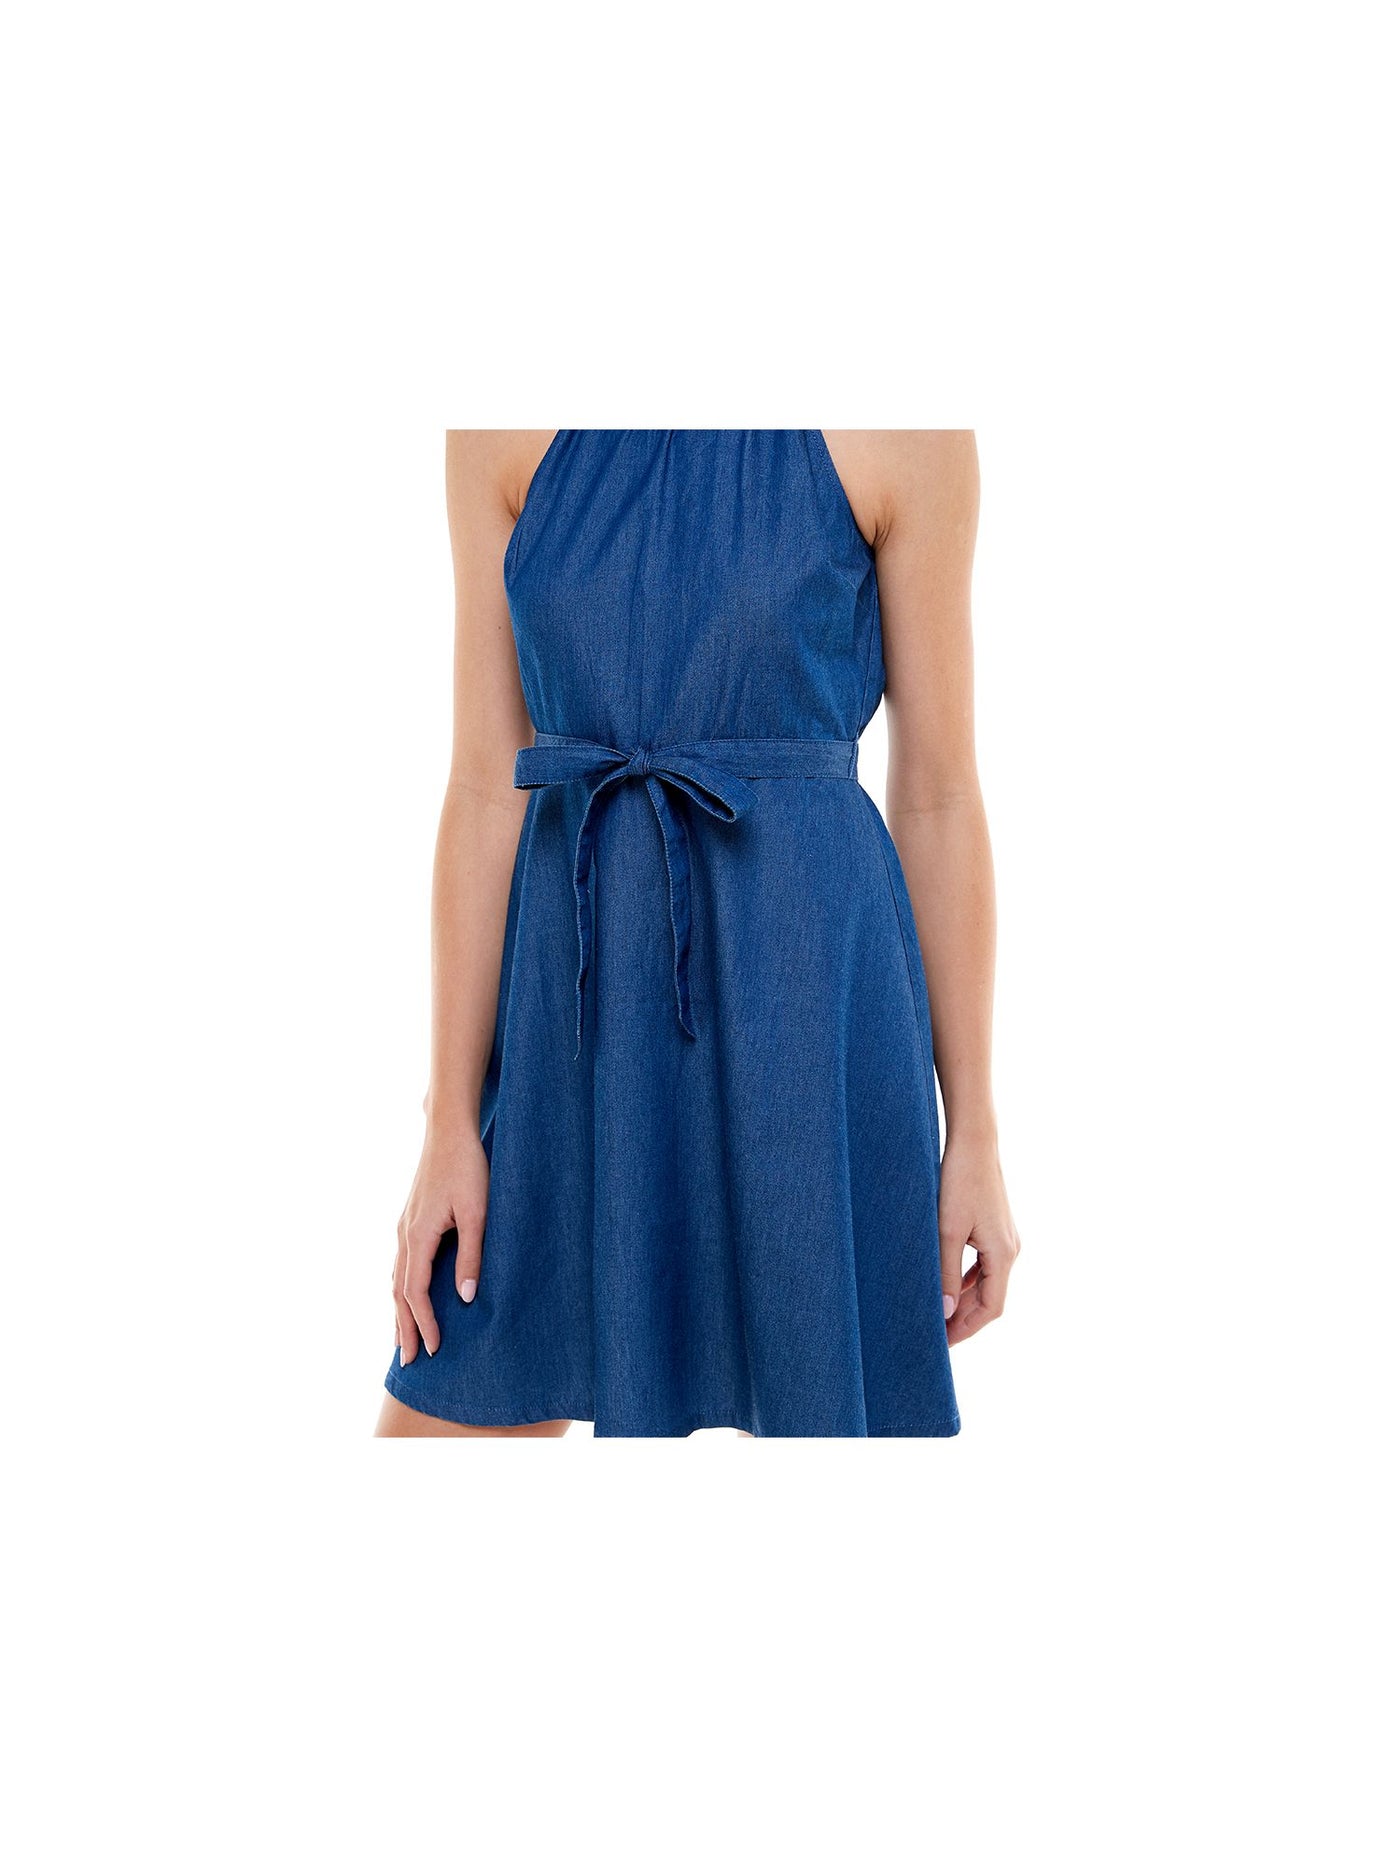 Rosie Harlow Womens Navy Denim Tie Sleeveless Halter Short Fit + Flare Dress Juniors S